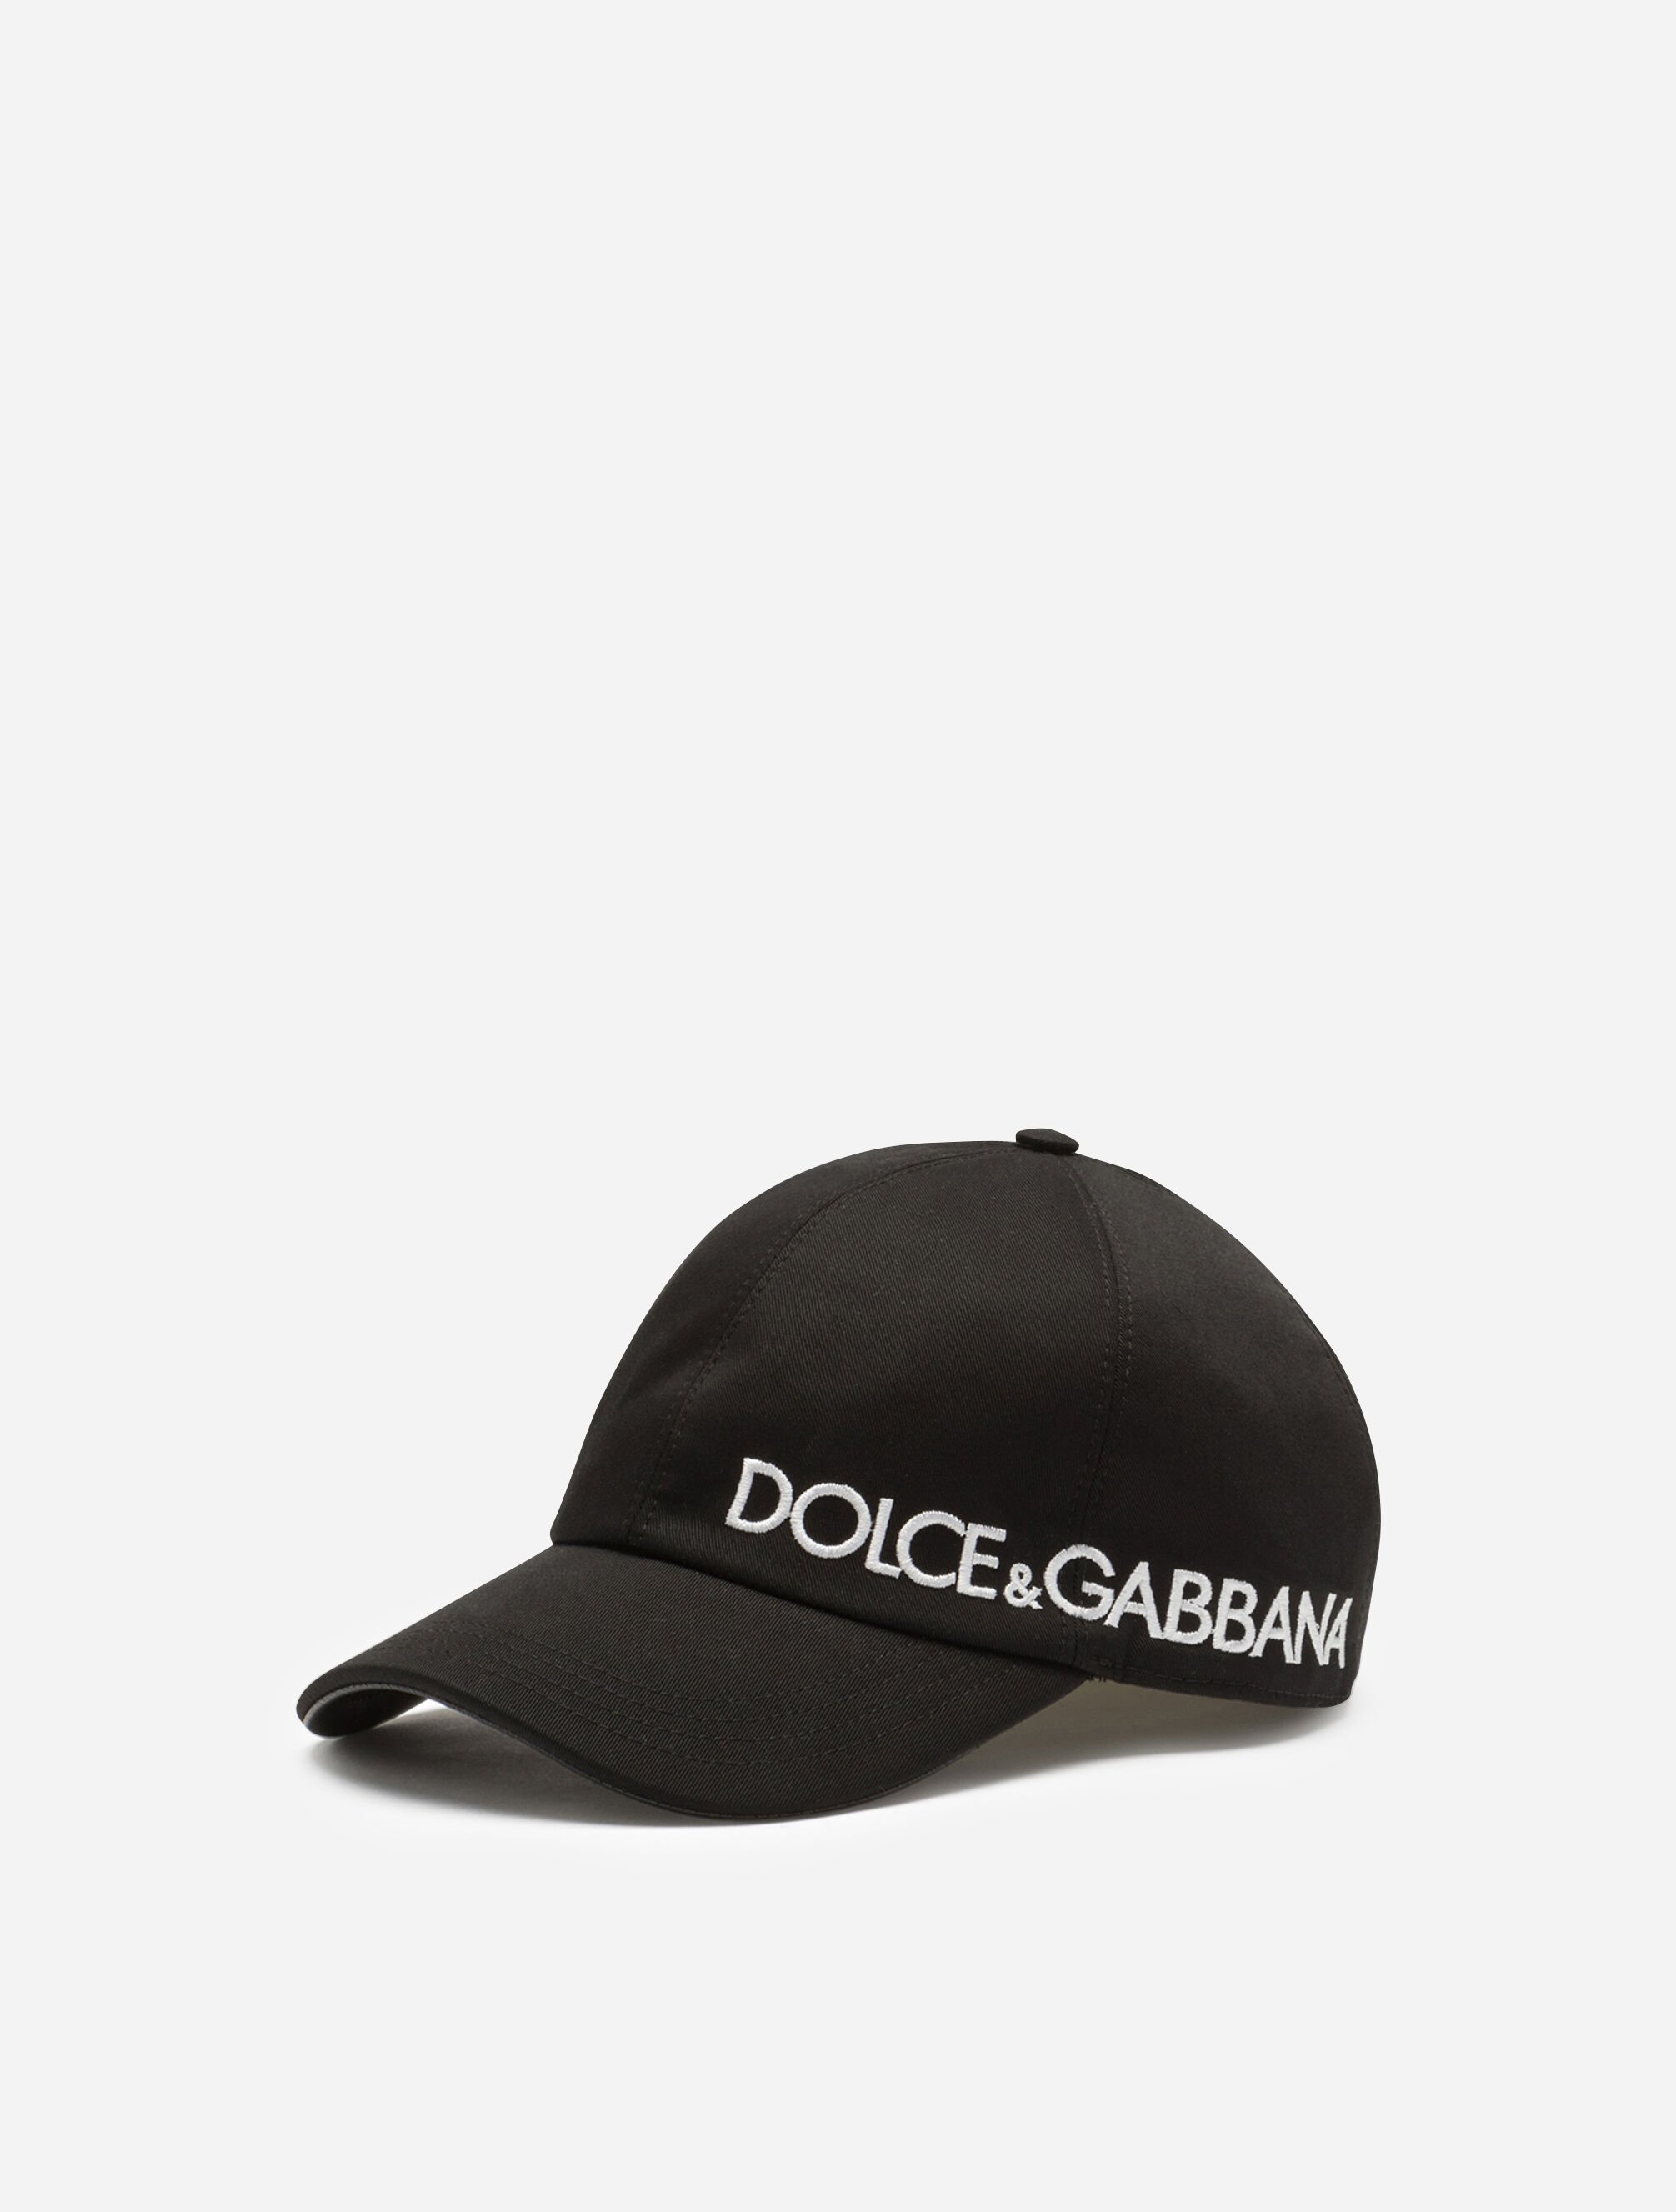 Dolce & Gabbana Dolce&Gabbana baseball cap with embroidery Black GH810AFJSB7